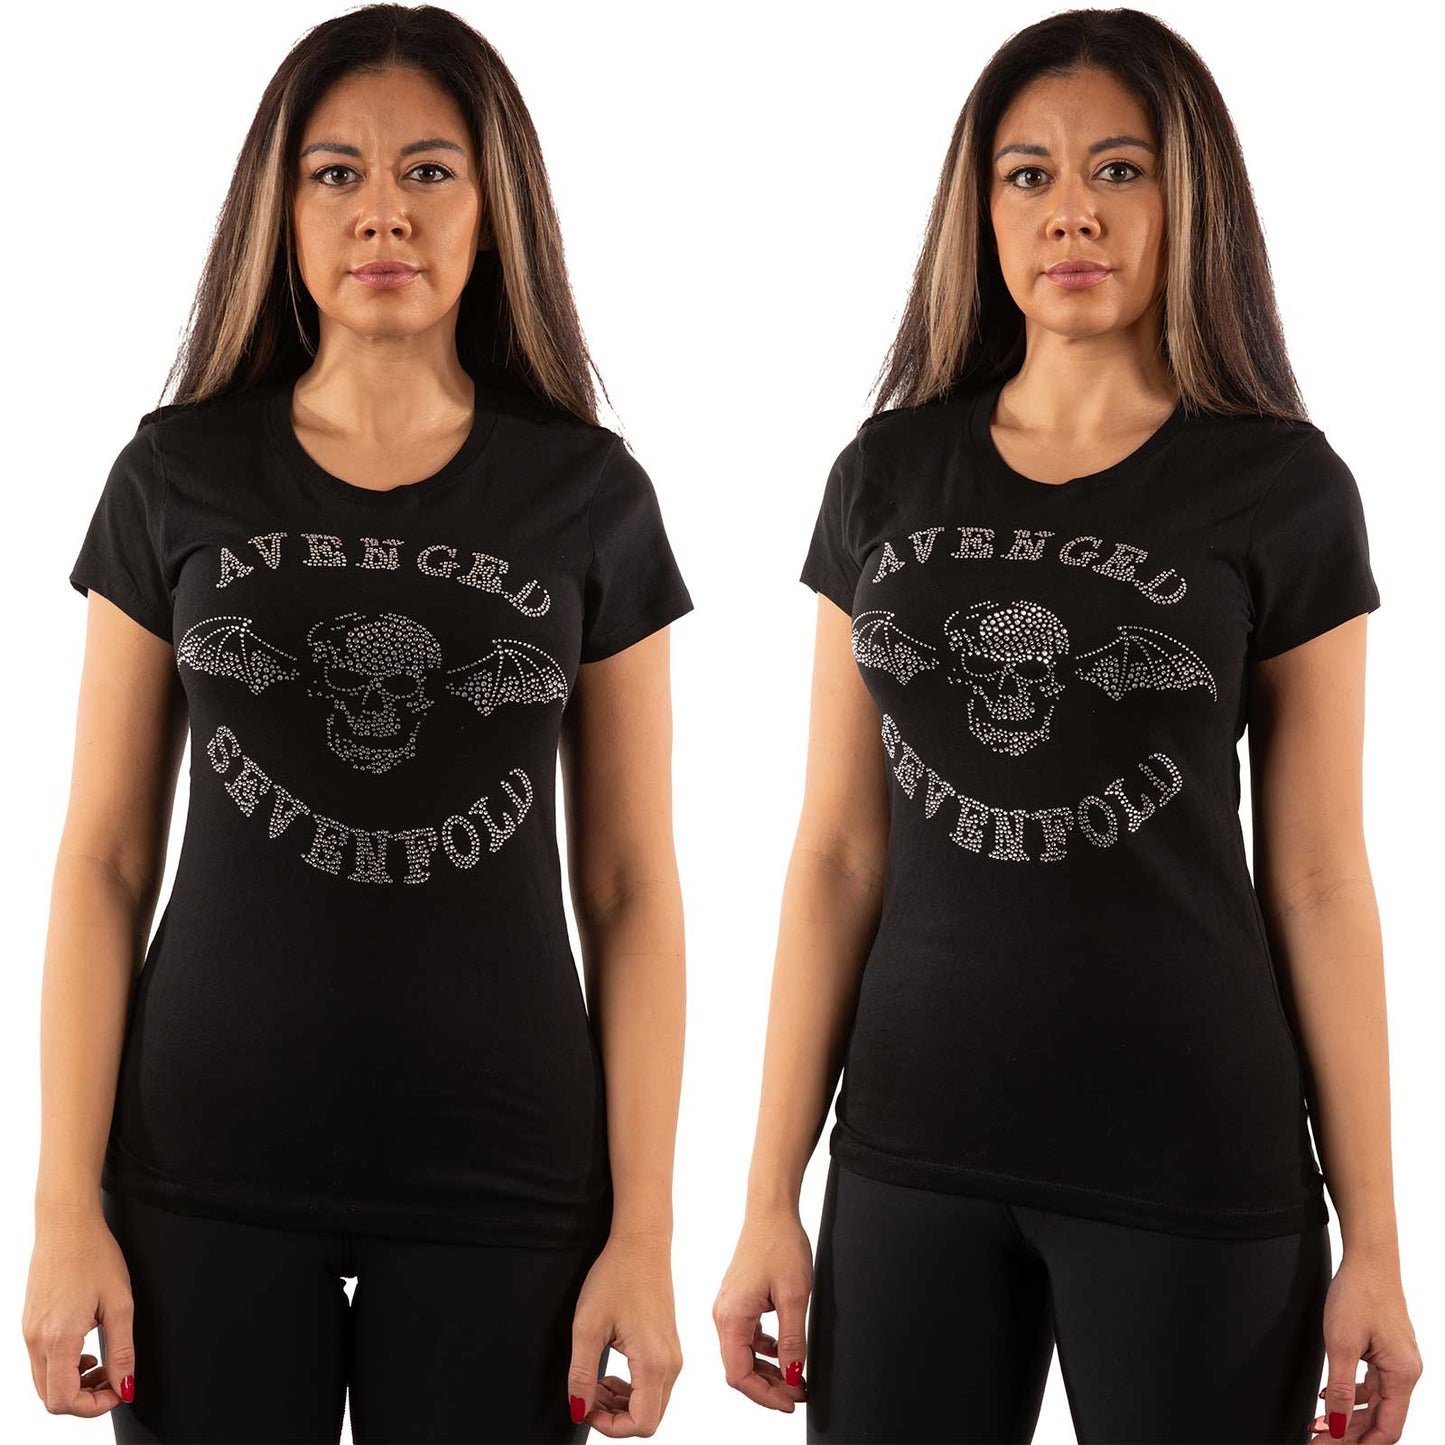 Avenged Sevenfold Ladies T-Shirt: Death Bat